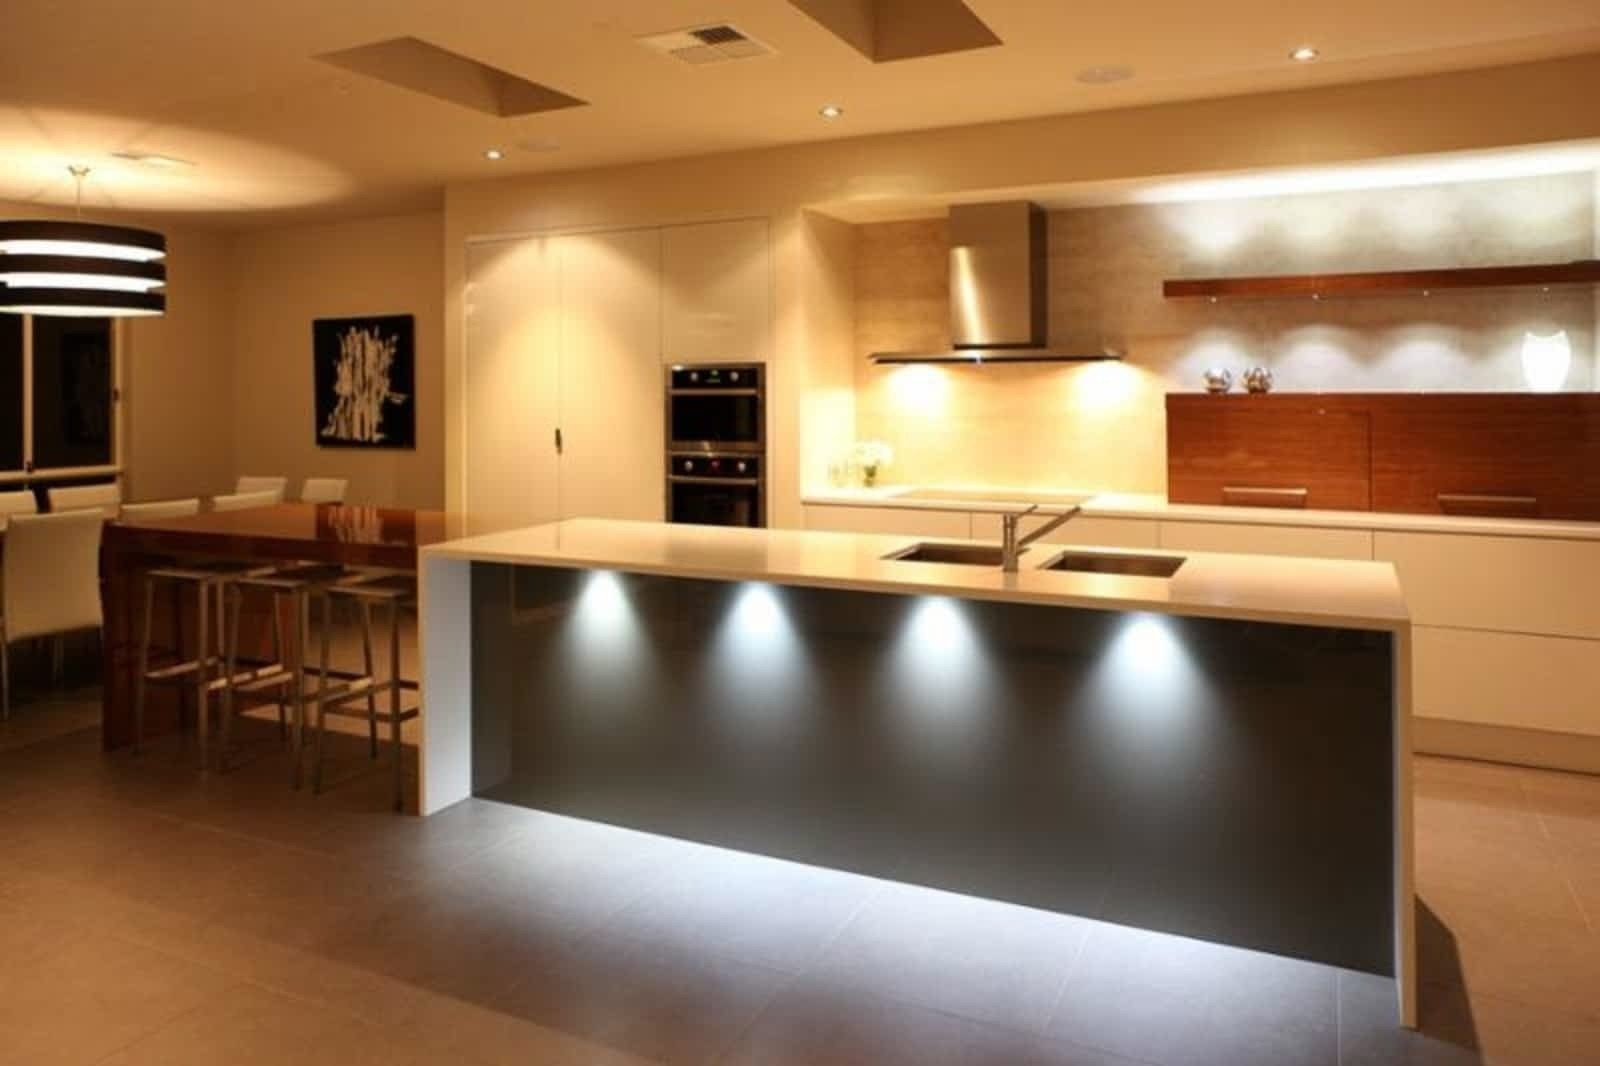 Верхняя подсветка кухни. Освещение на кухне. Декоративная подсветка кухни. Красивая подсветка кухни. Встроенные светильники на кухне.